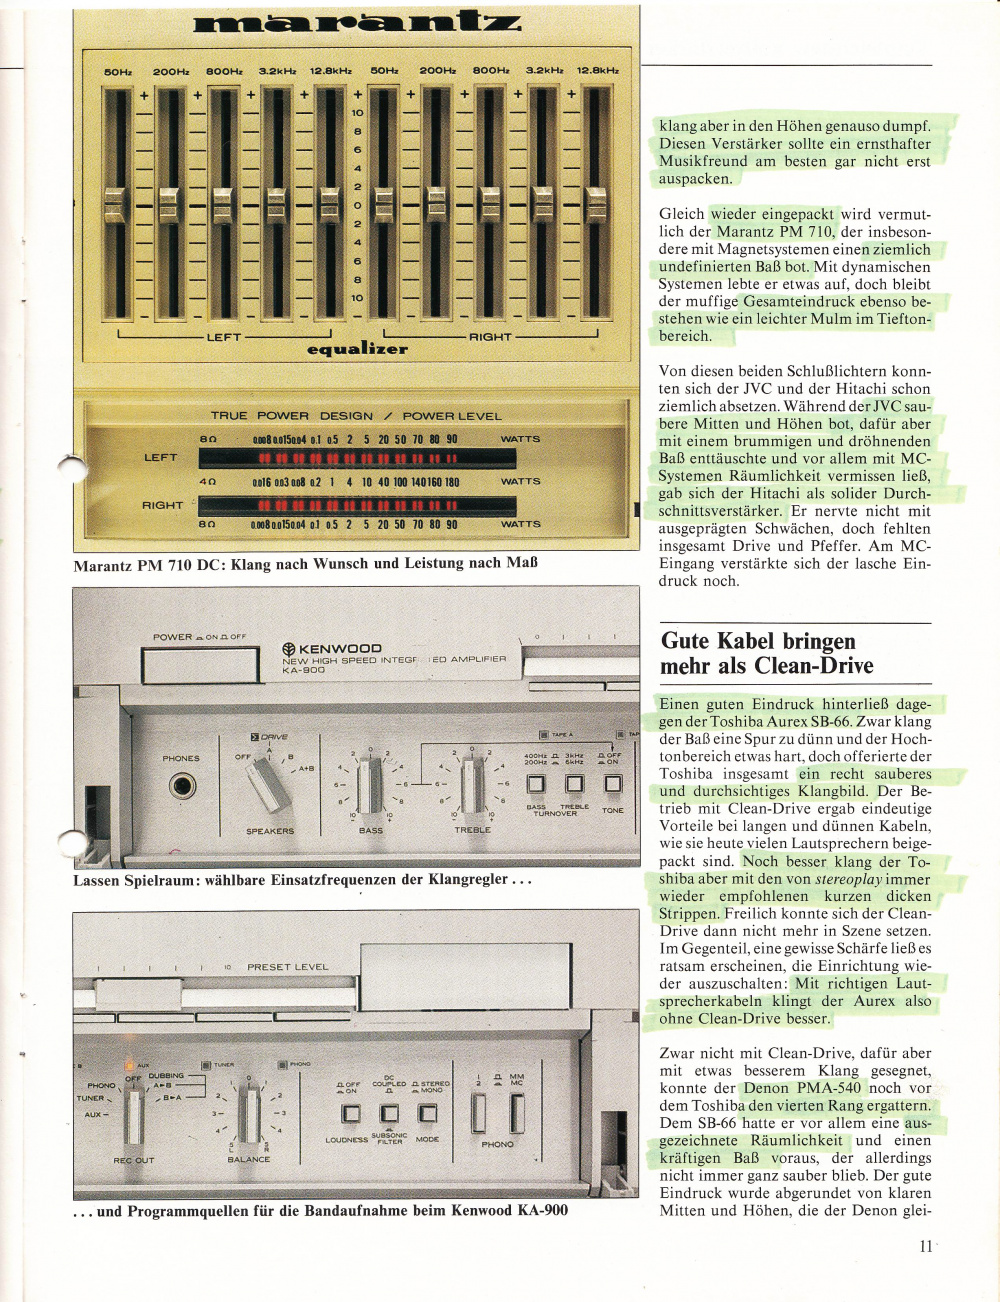 Stereoplay April 1981 9 Verstärker im Vergleich 11.jpg